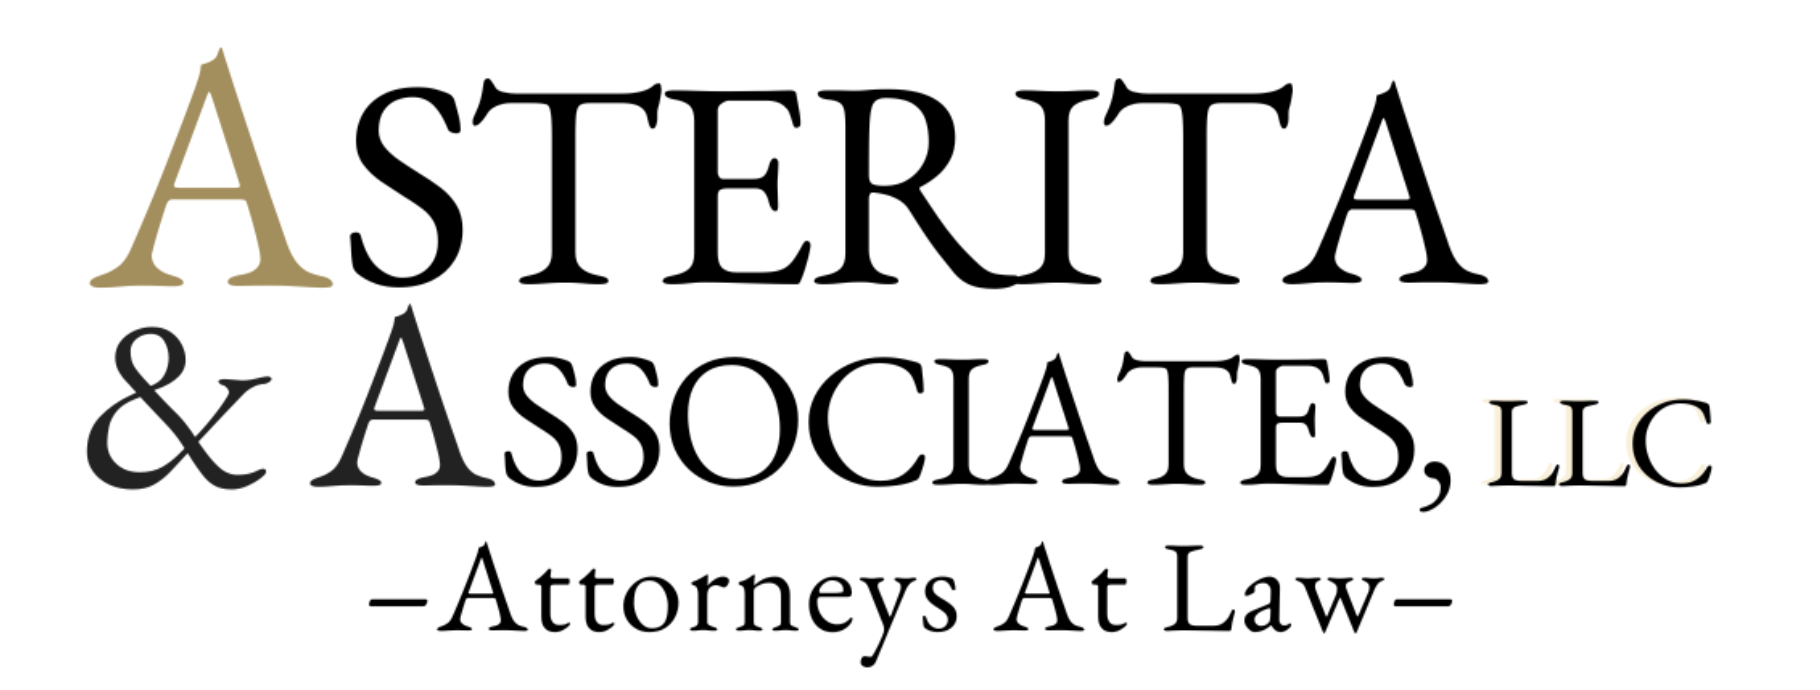 Asterita & Associates, LLC, Attorneys at Law